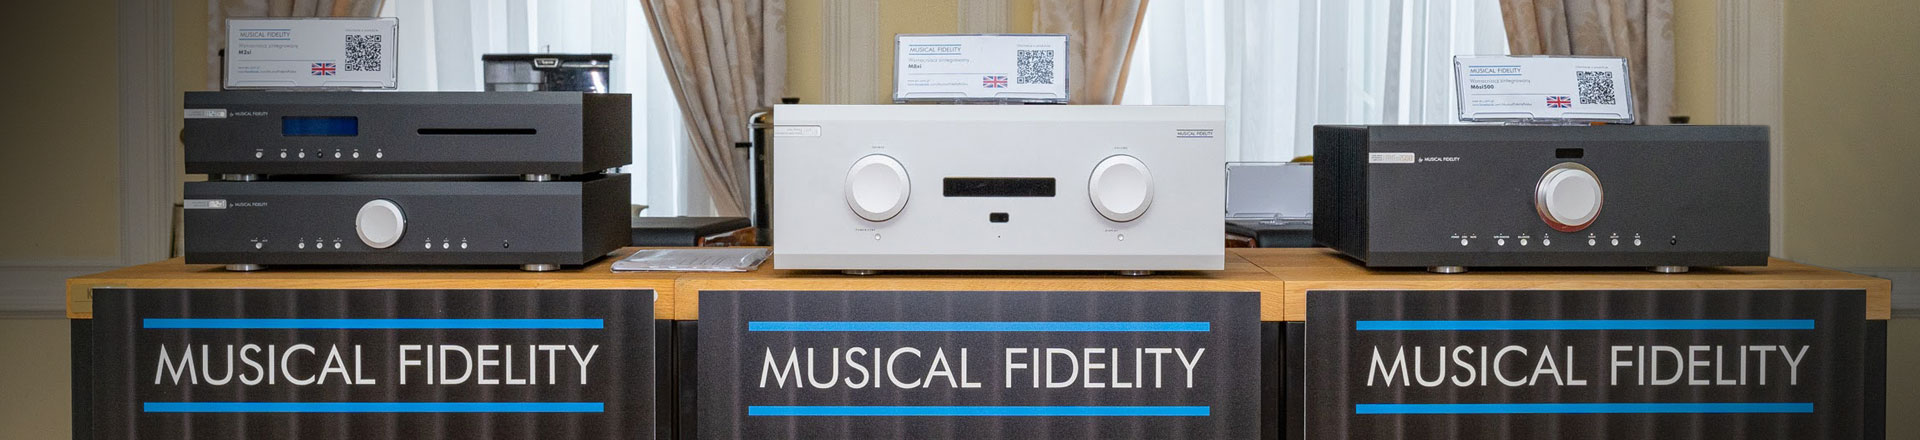 MUSICAL FIDELITY = Music + High Fidelity / Audio E.I.C. Show